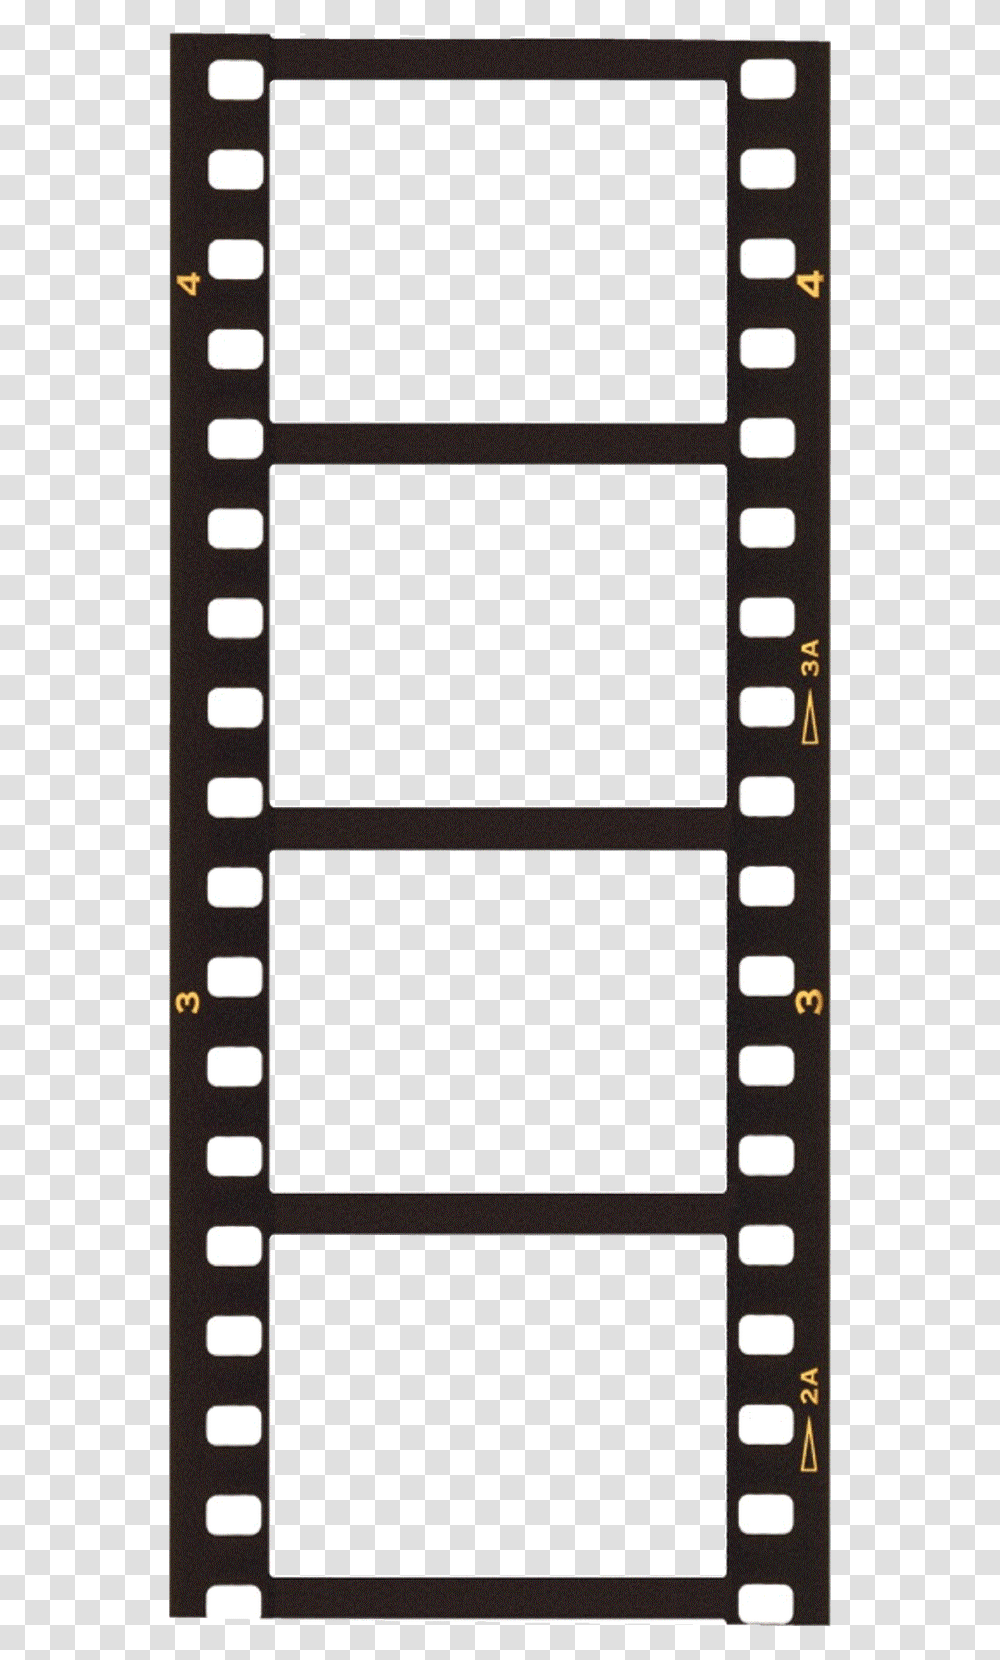 Criteria For Judging A Film, Mobile Phone, Electronics, Brick Transparent Png